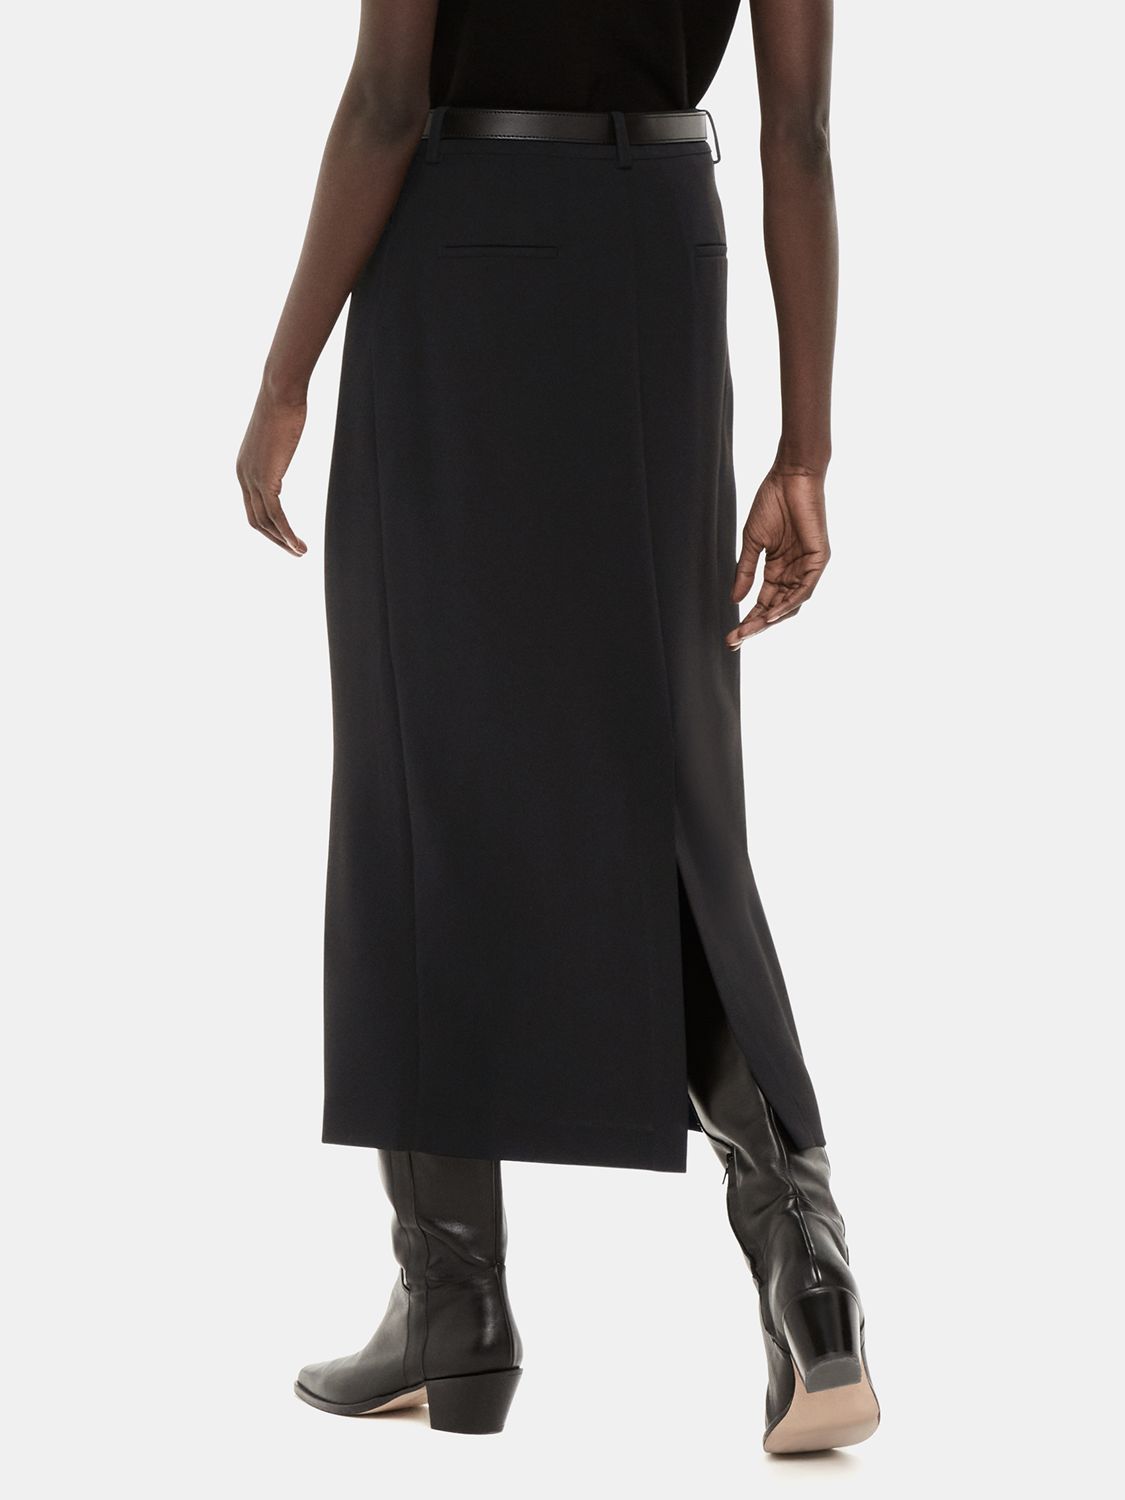 Whistles Petite Abigail Tailored Midi Skirt, Black at John Lewis & Partners